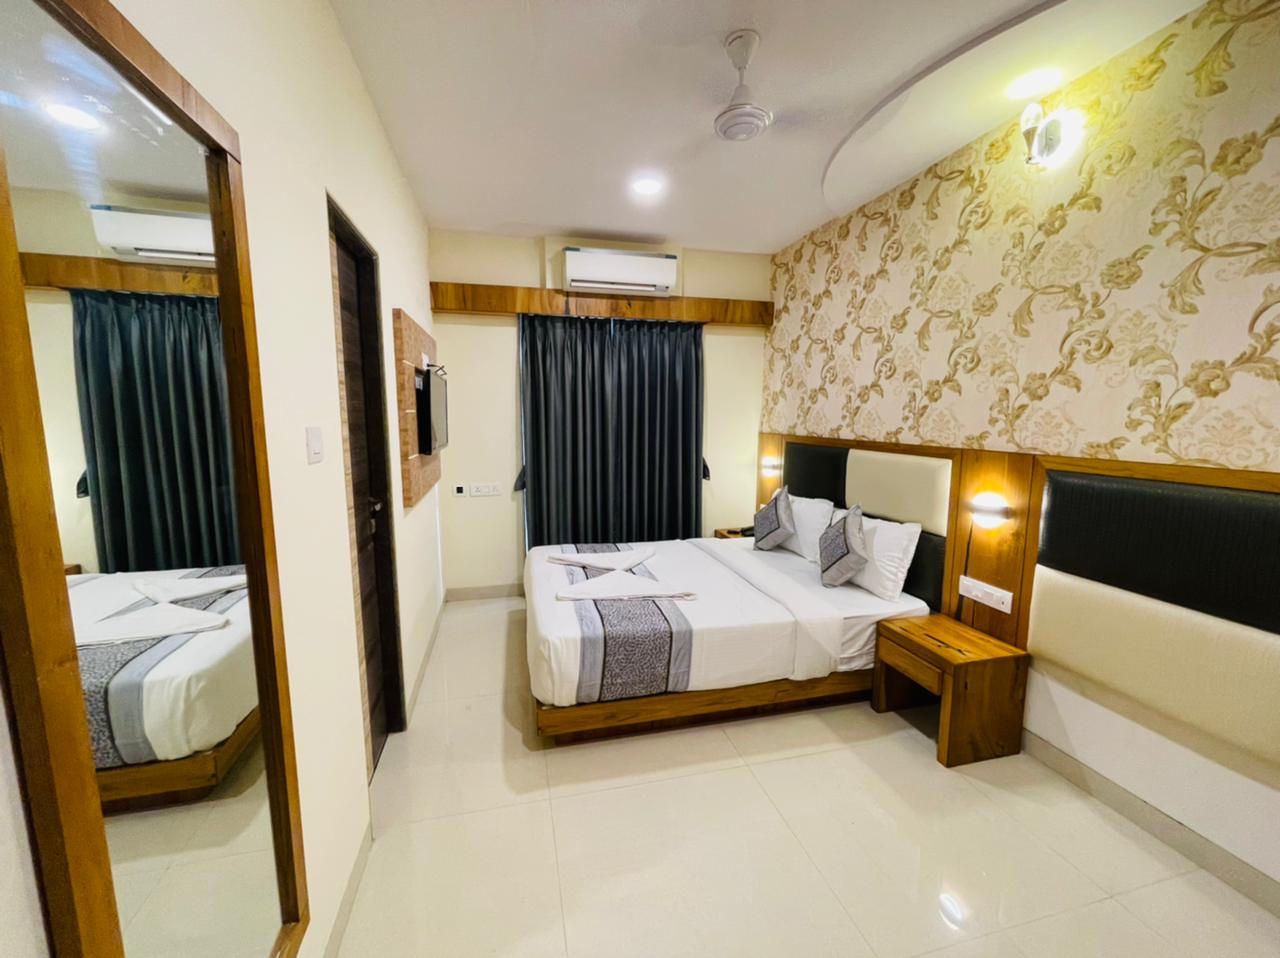 Deluxe-Room-service-apartment-near-Mumbai-airport